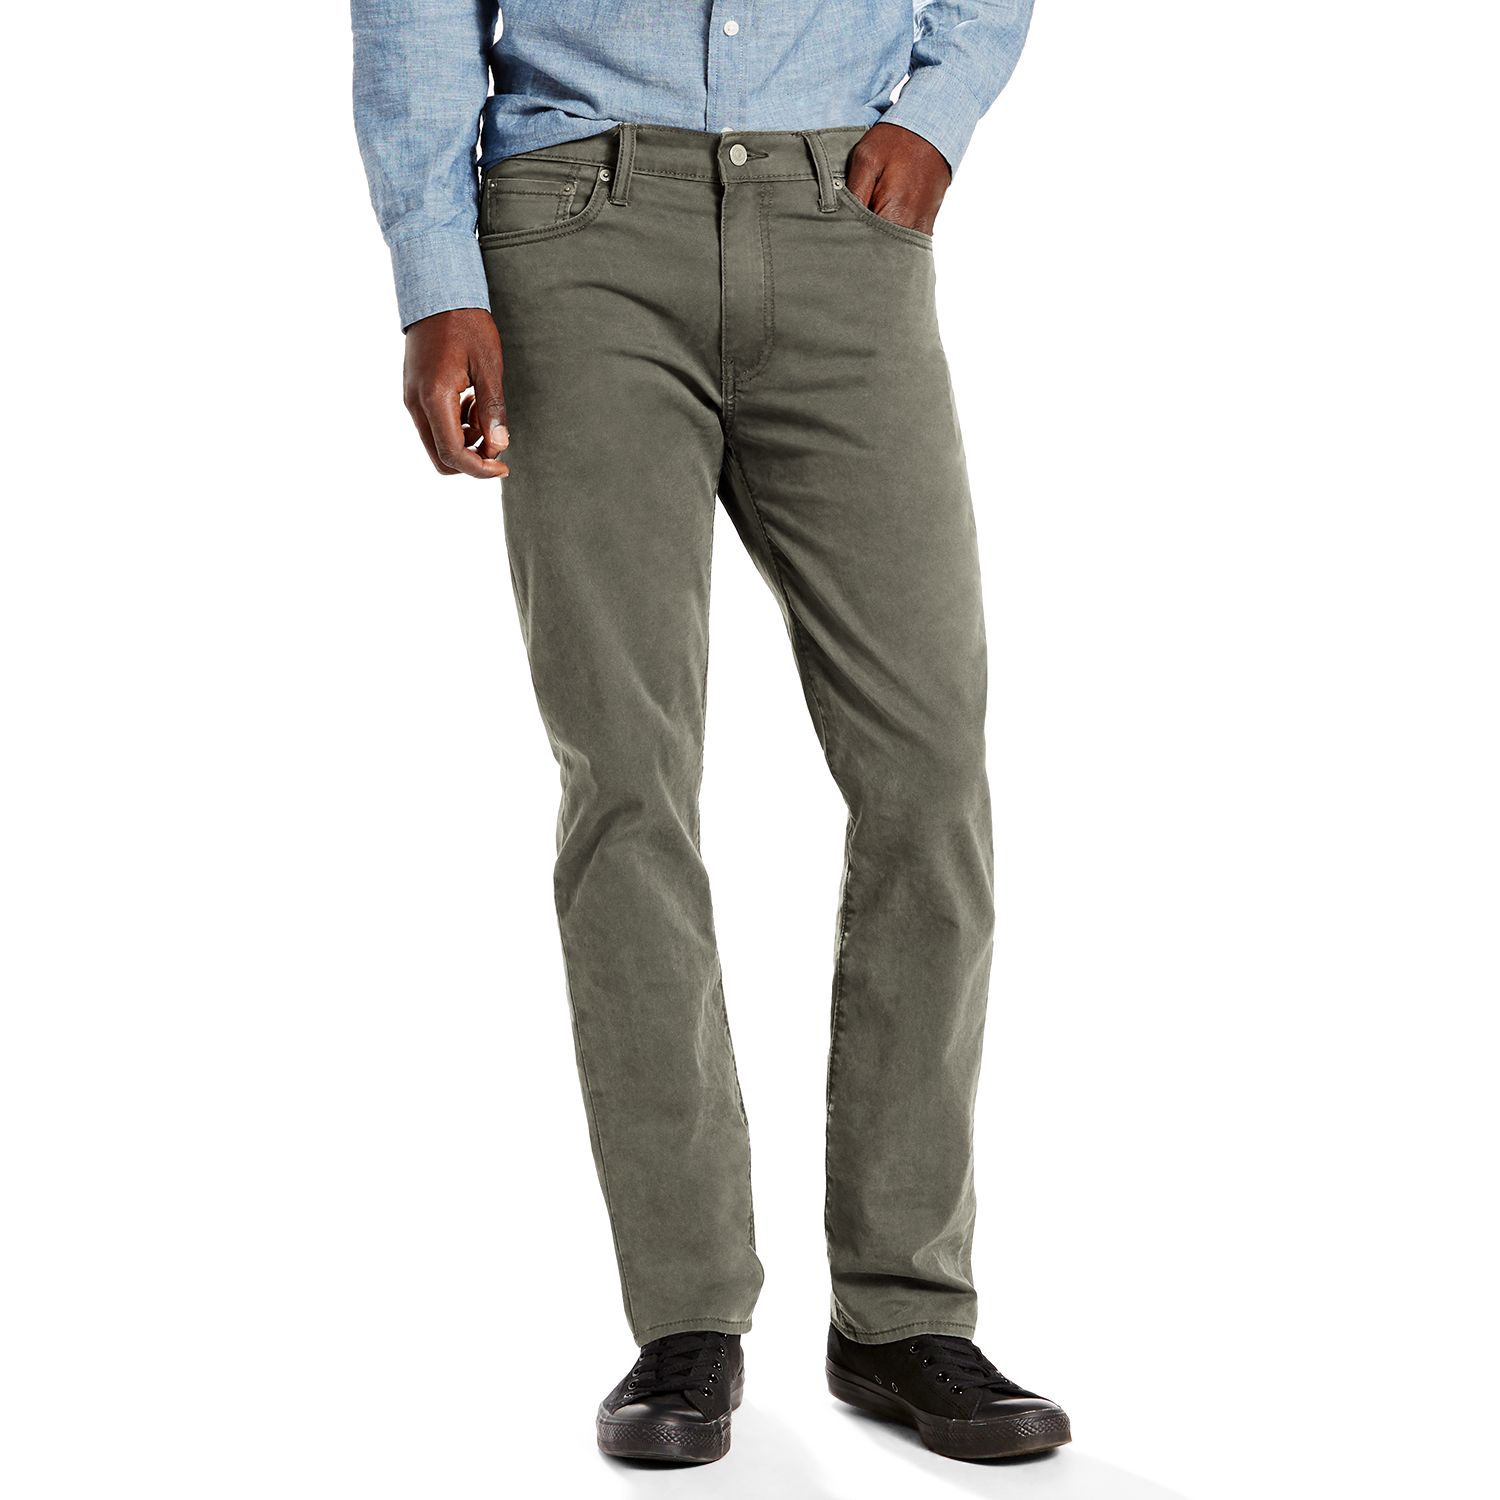 Men's Levi's® 513™ Slim Straight Jeans